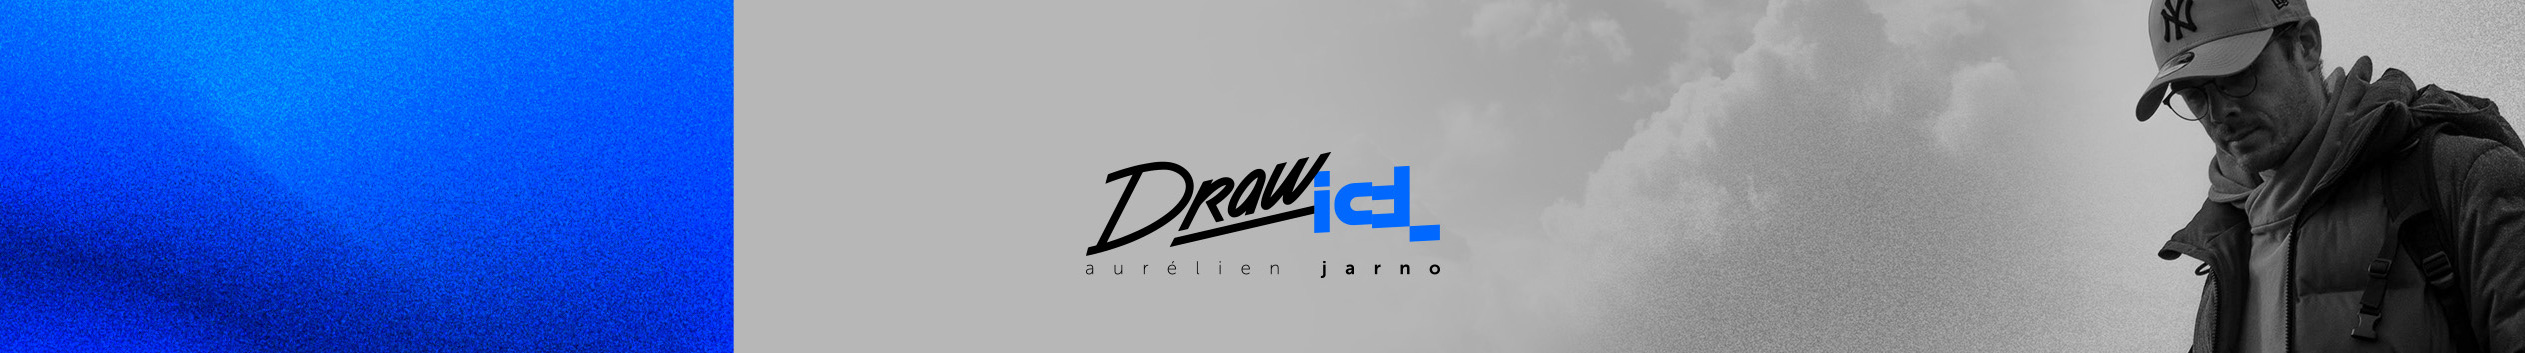 DRAWID - Aurélien Jarnos profilbanner